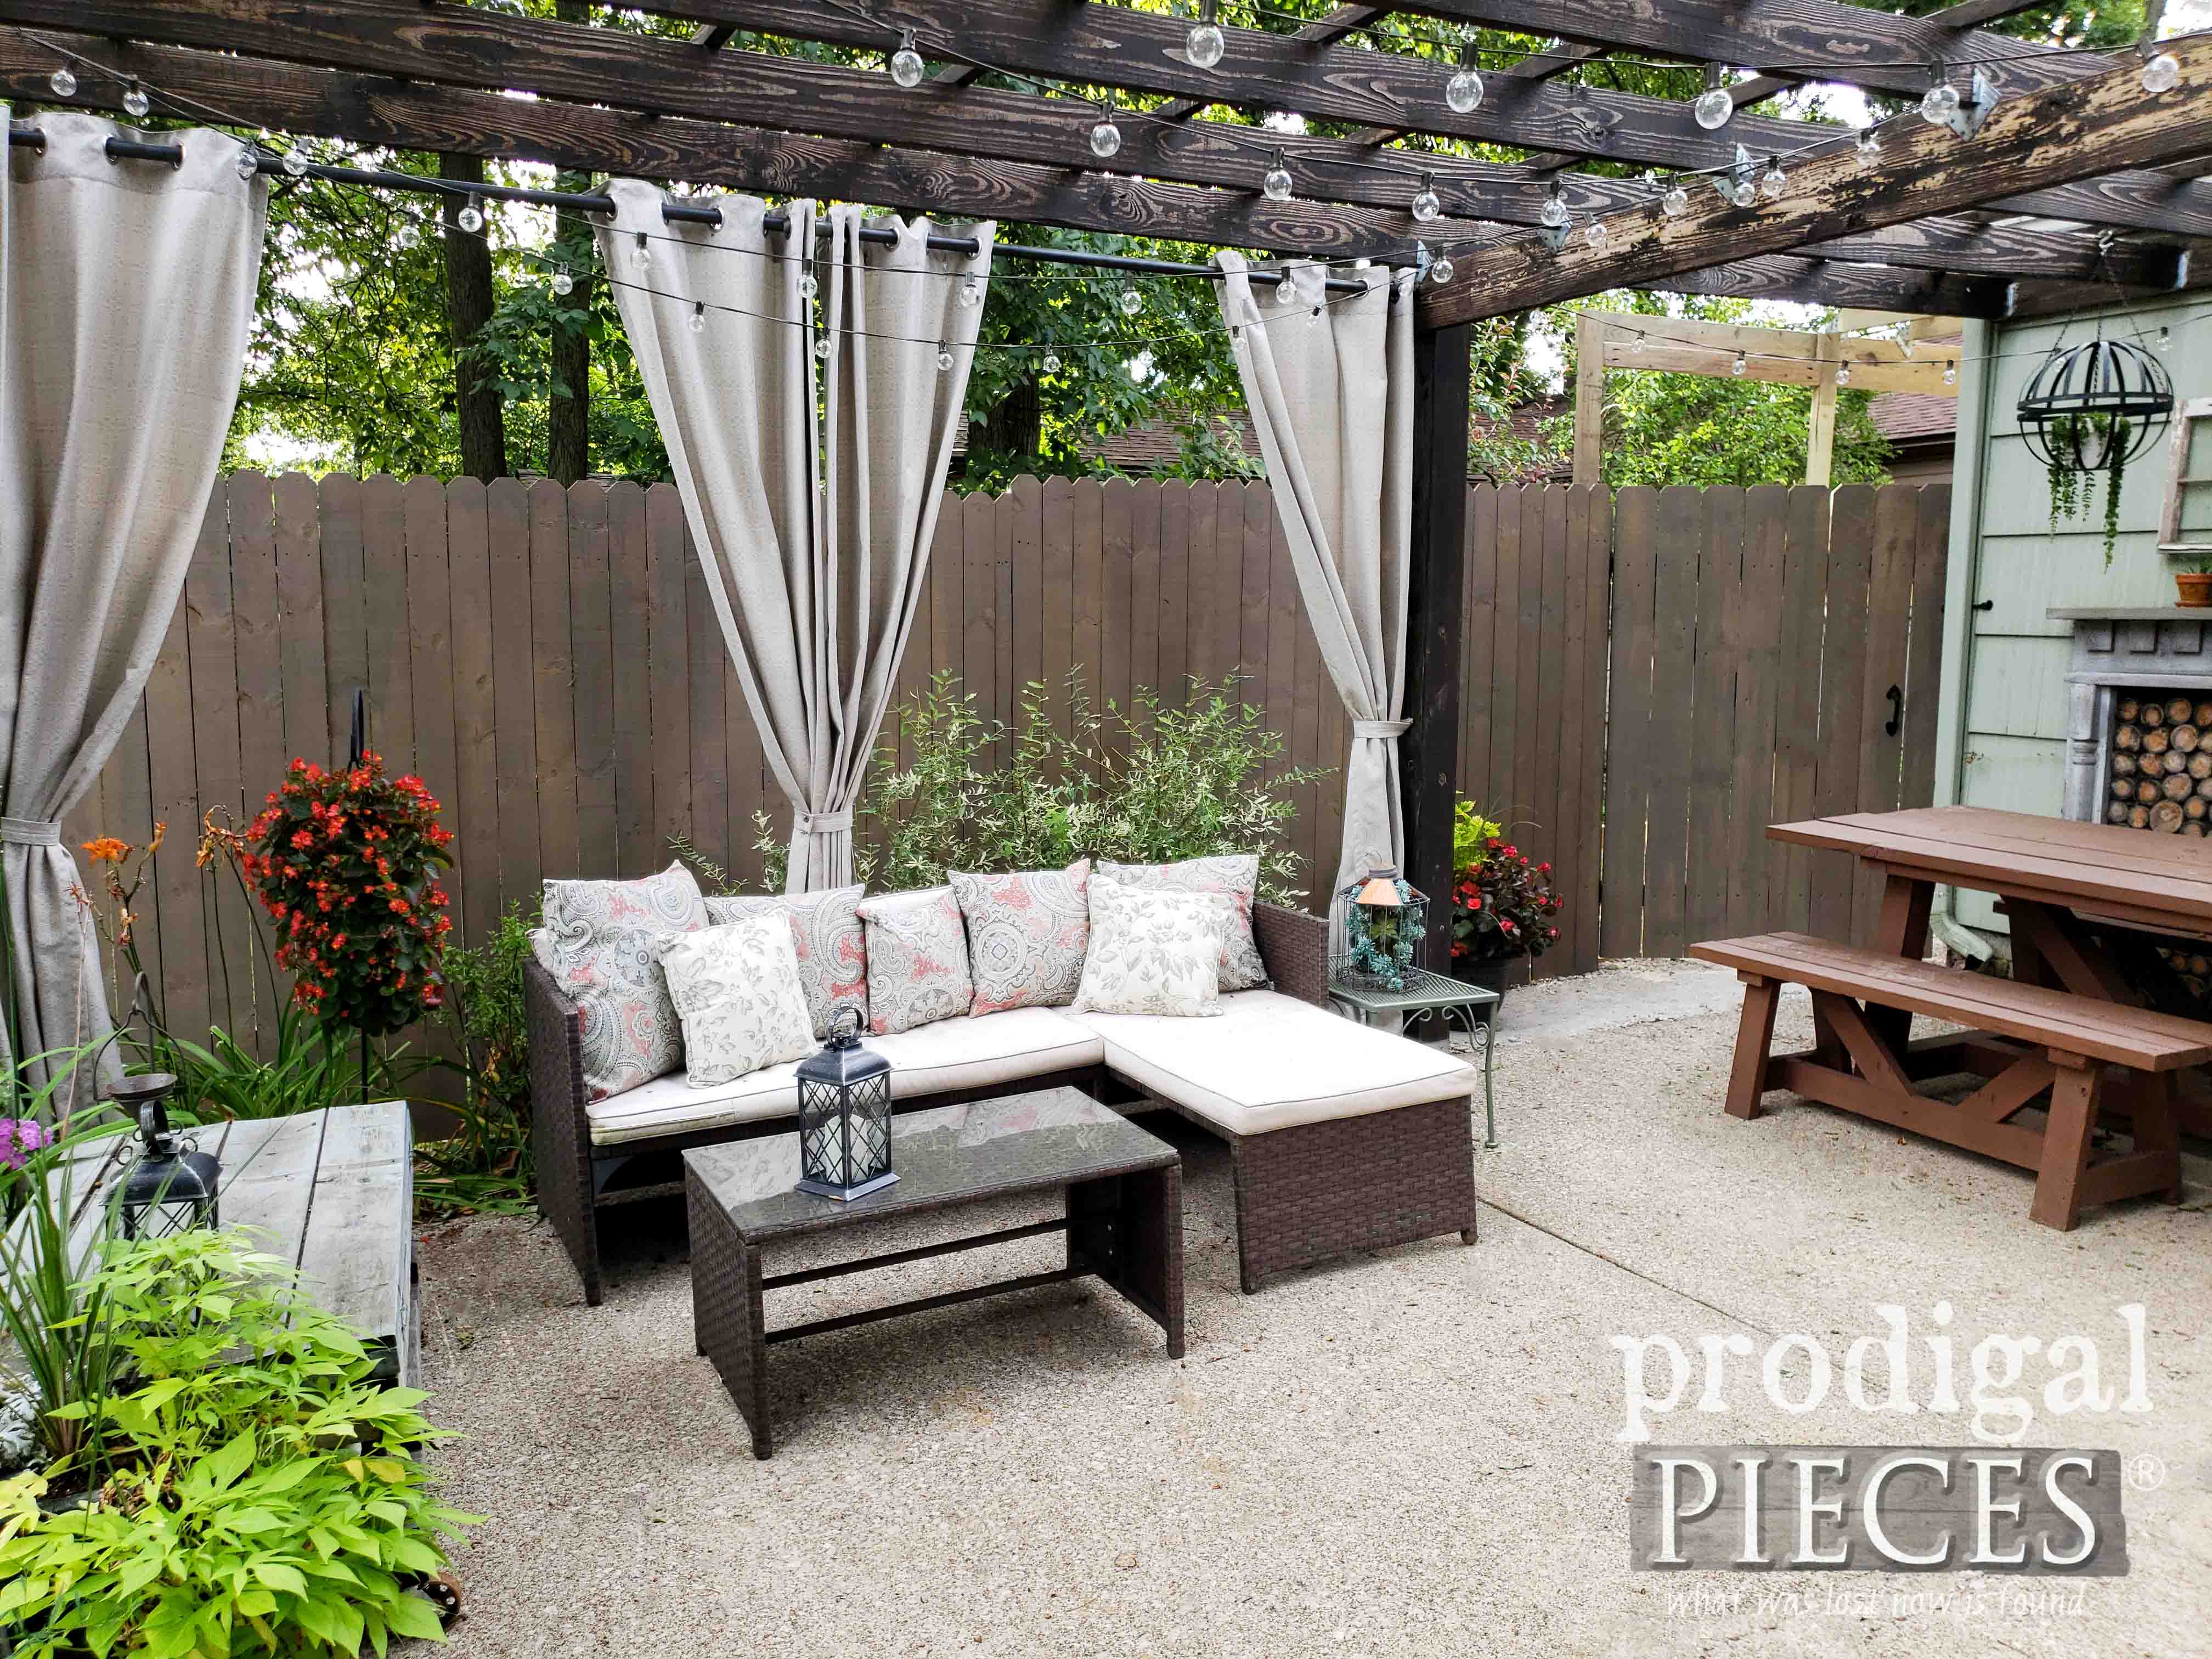 DIY Patio Fence with Dining Area under Pergola by Prodigal Pieces | prodigalpieces.com #prodigalpieces #diy #home #homeimprovement #homedecor #outdoor